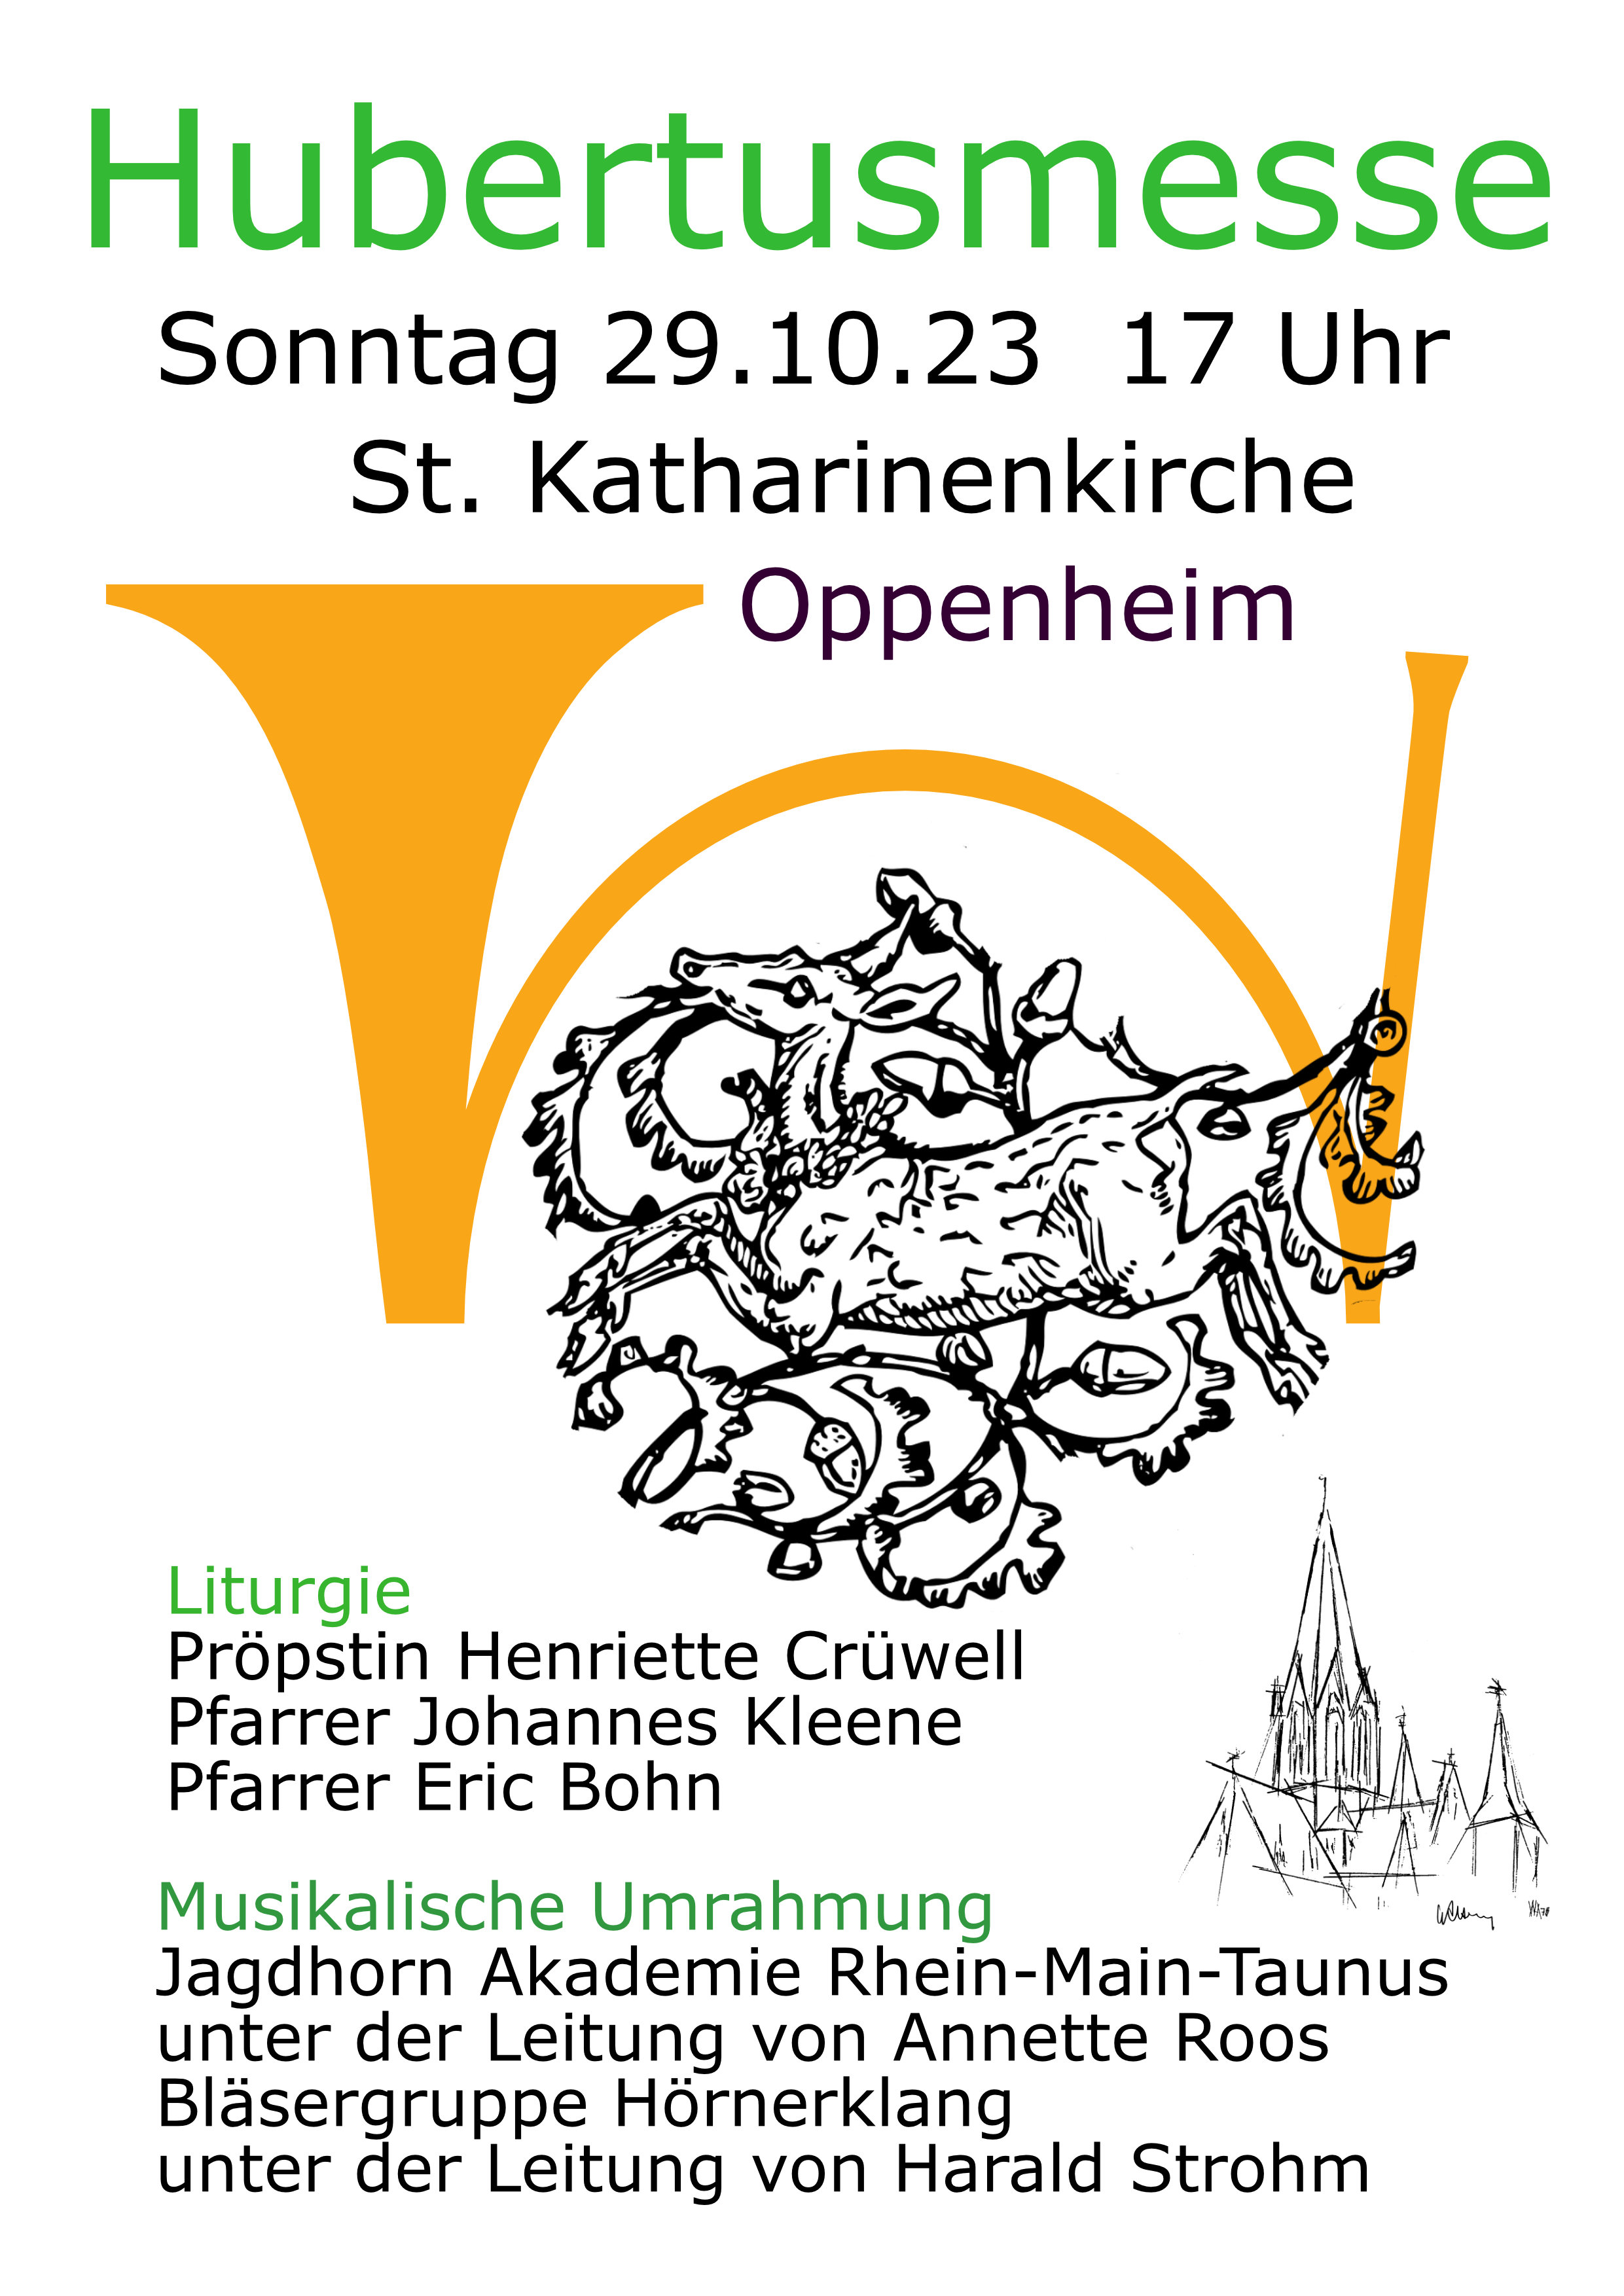 Hubertusmesse 29.10.2023 17:00 Oppenheim Katharinenkirche